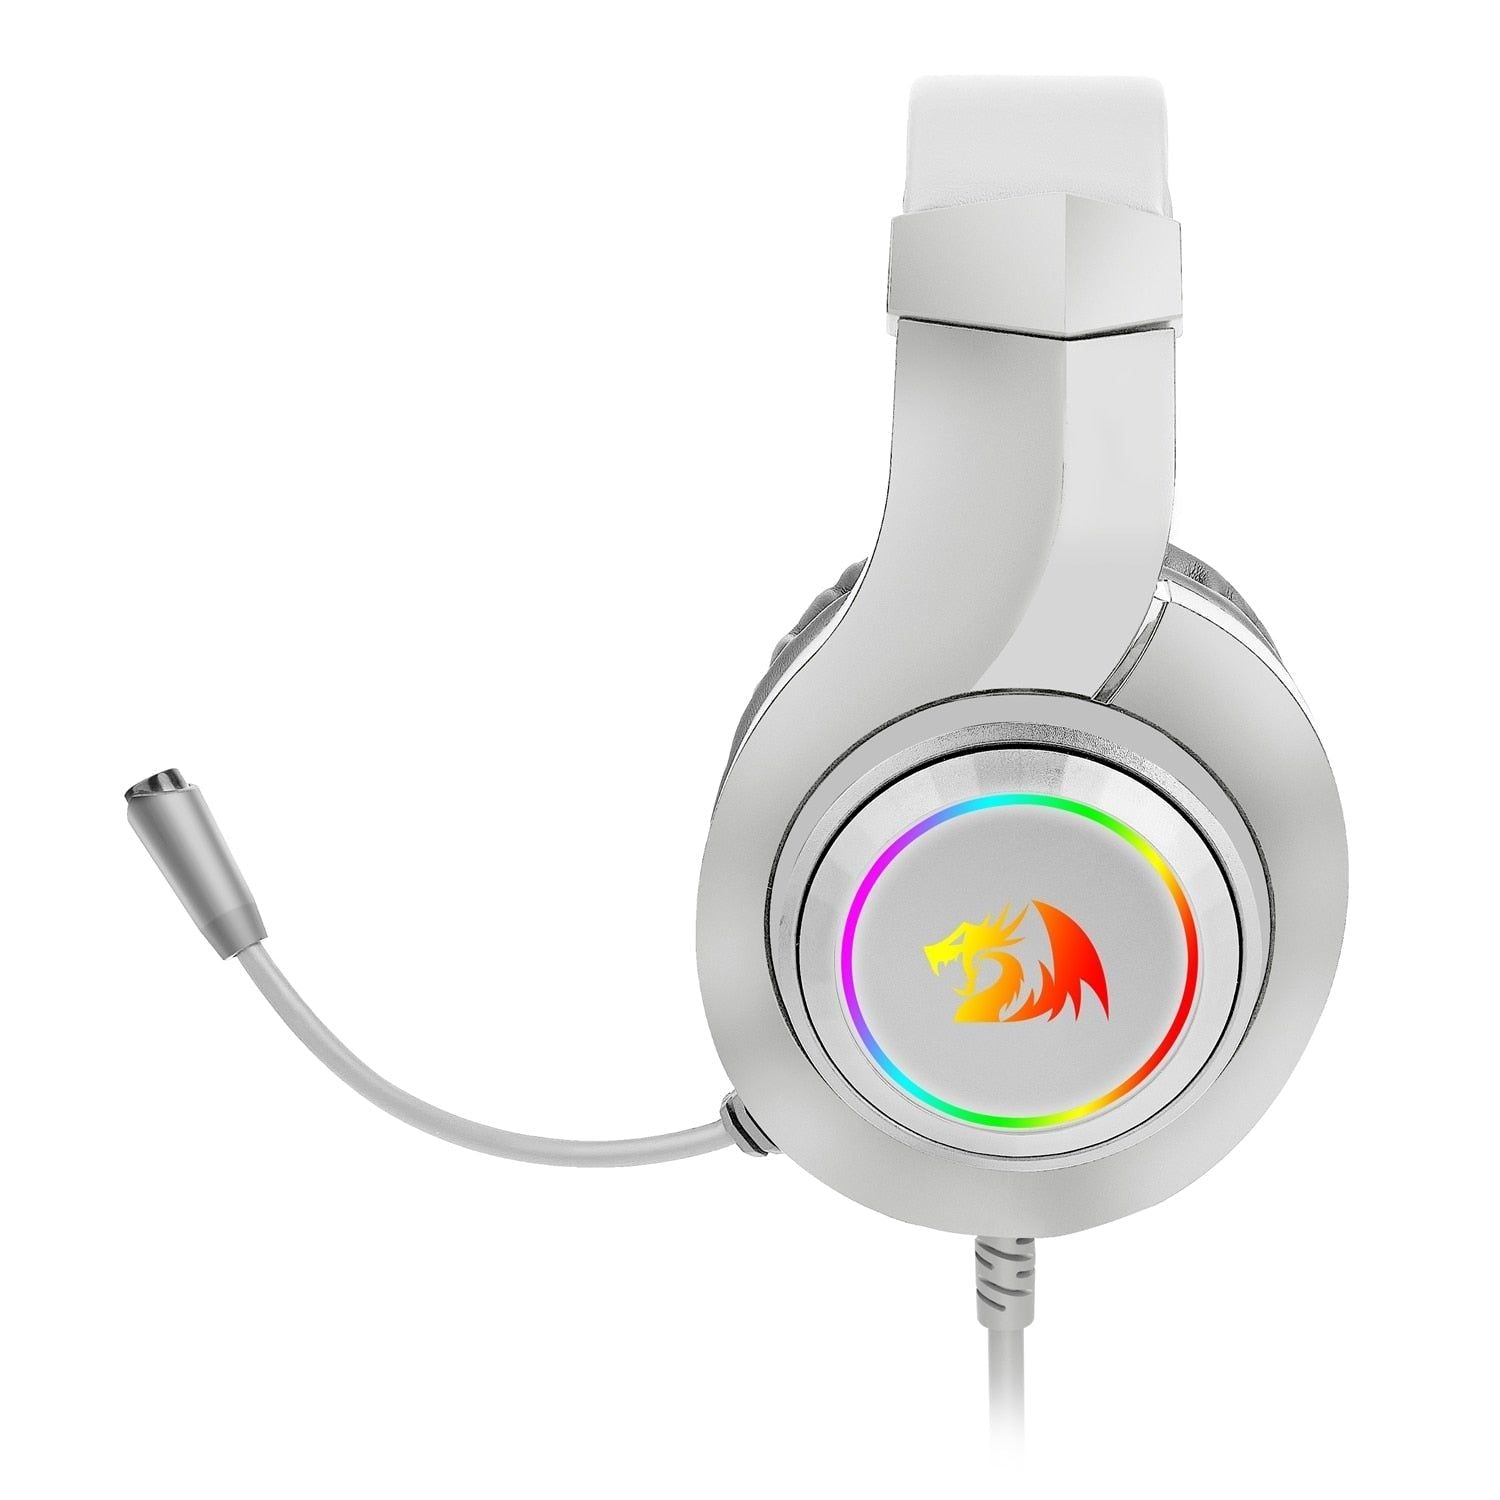 H260 RGB Wired Gaming Headset | Hifi Media Store